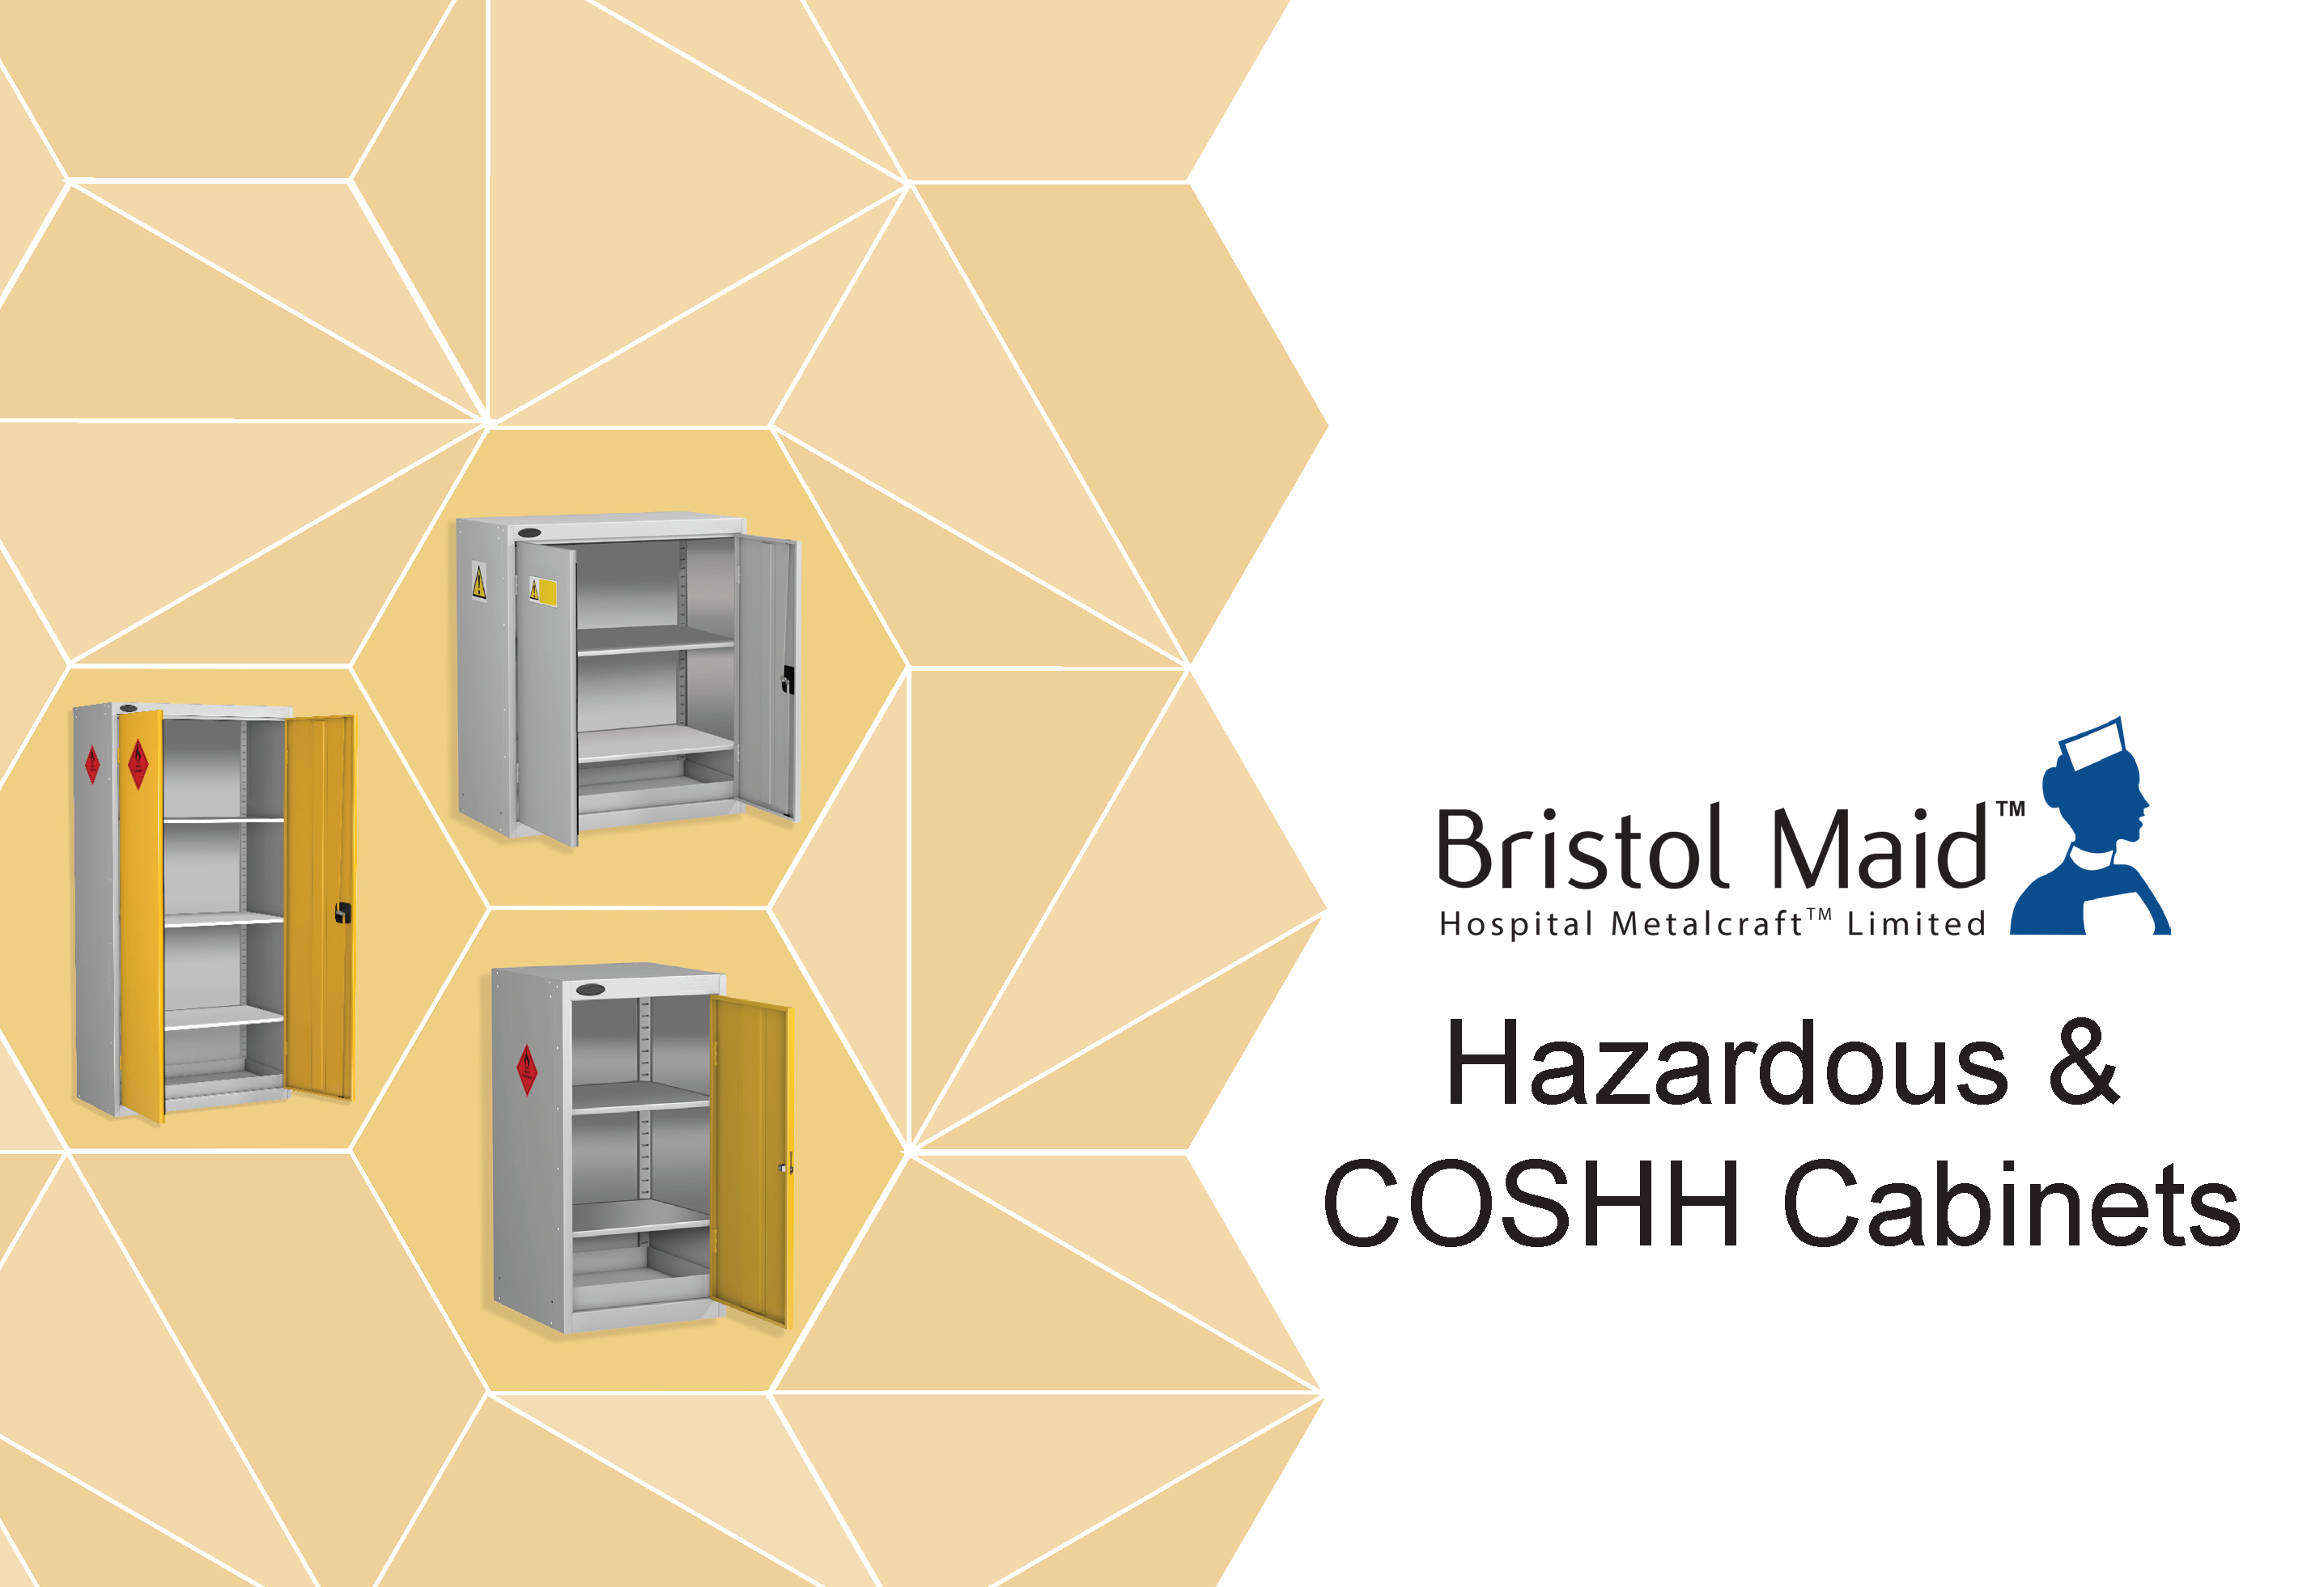 New Range of Hazardous and COSHH Cabinets